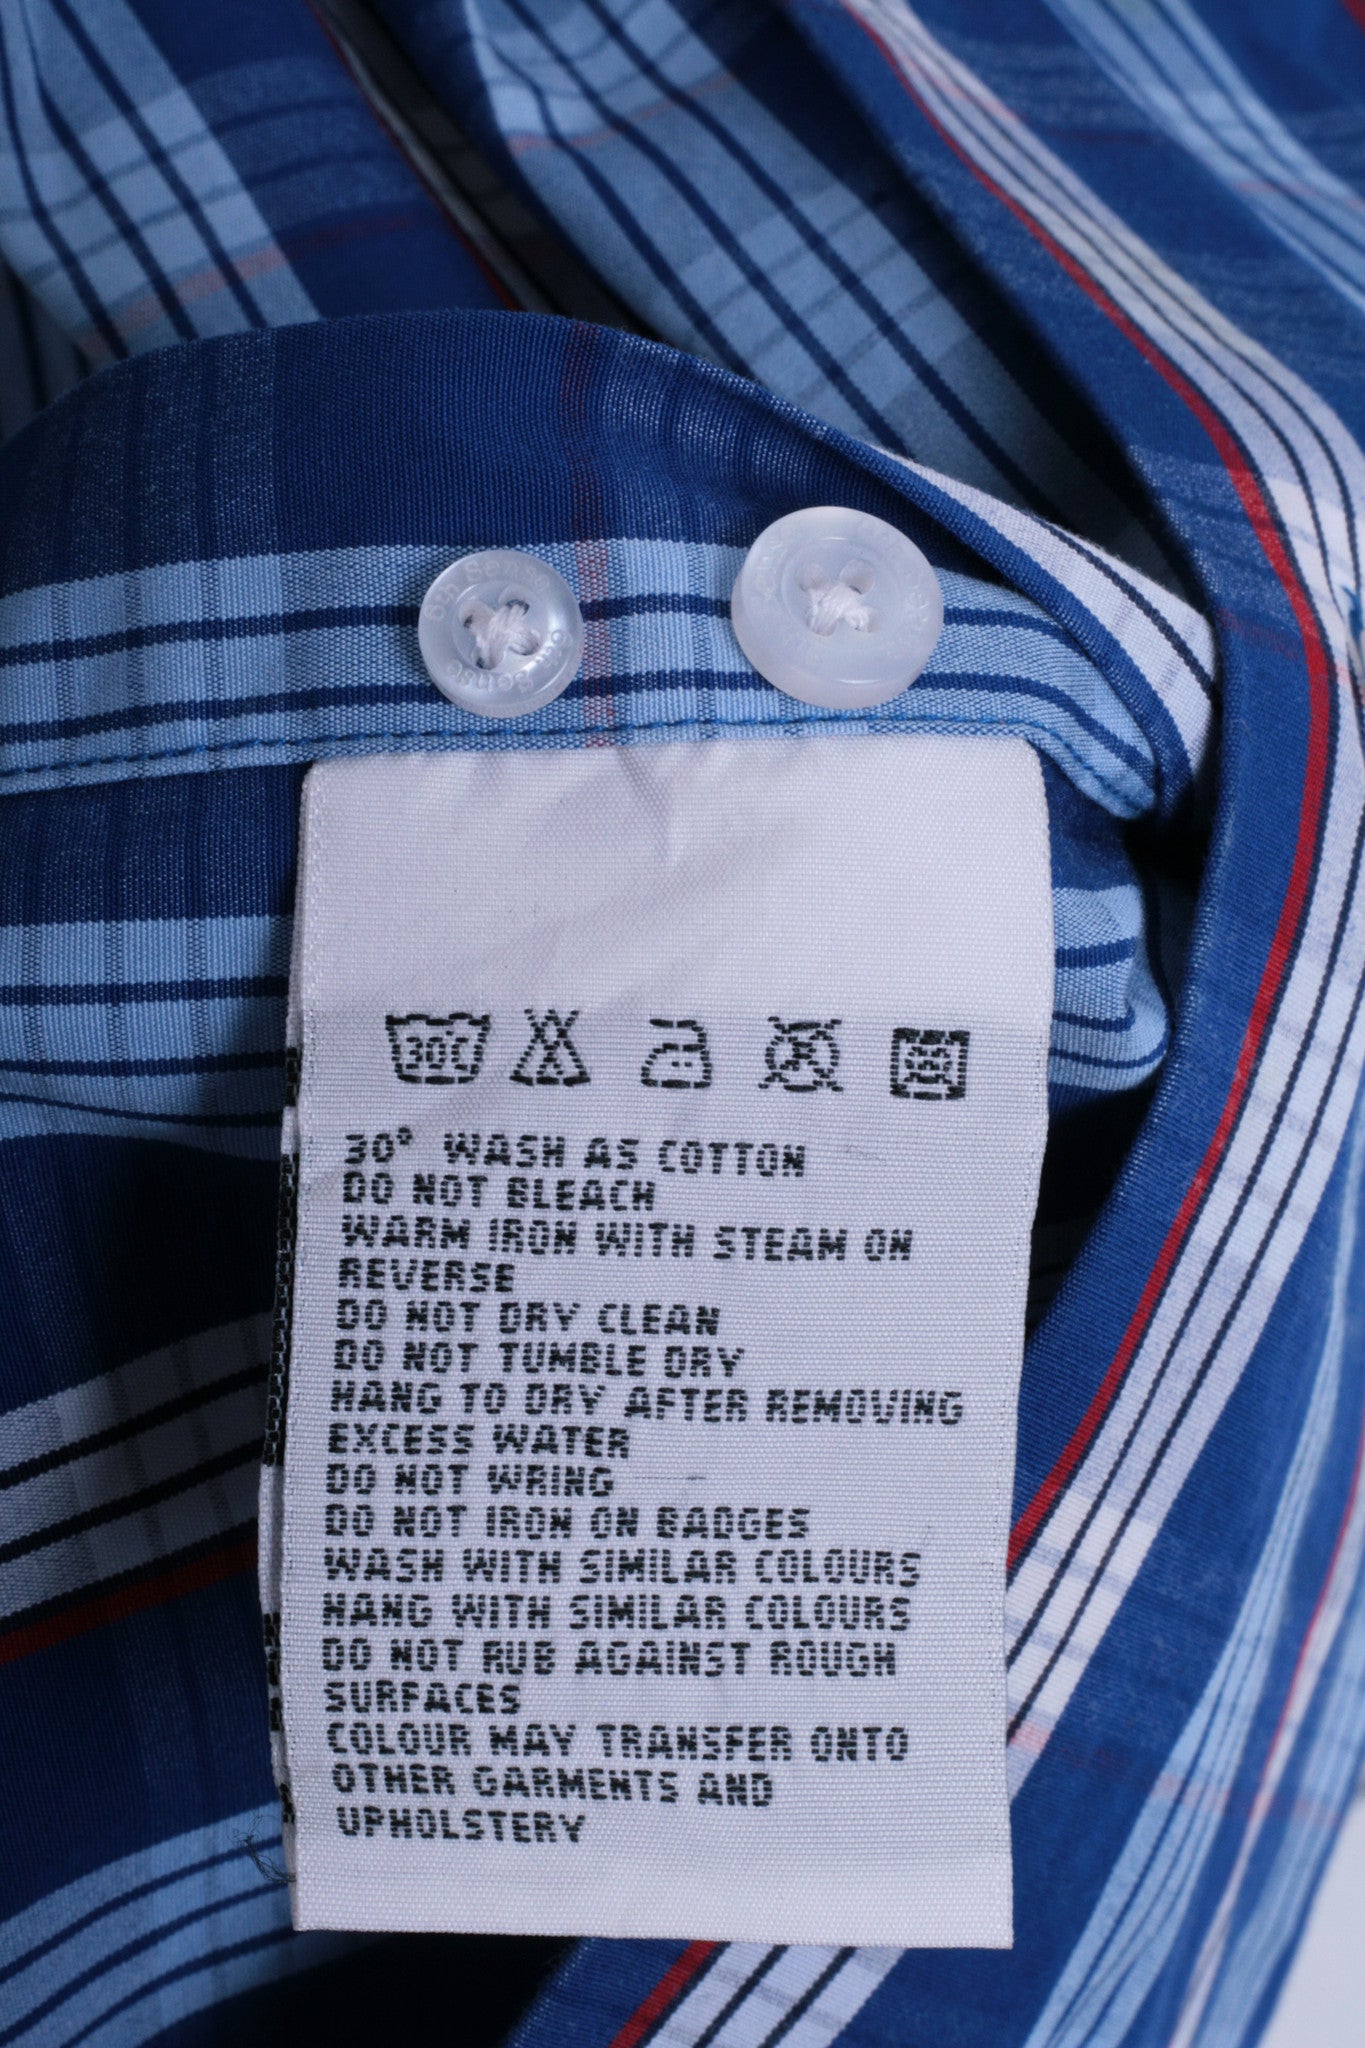 6th Sense Global Designs Womens M Casual Shirt Check Royal Blue Cotton - RetrospectClothes